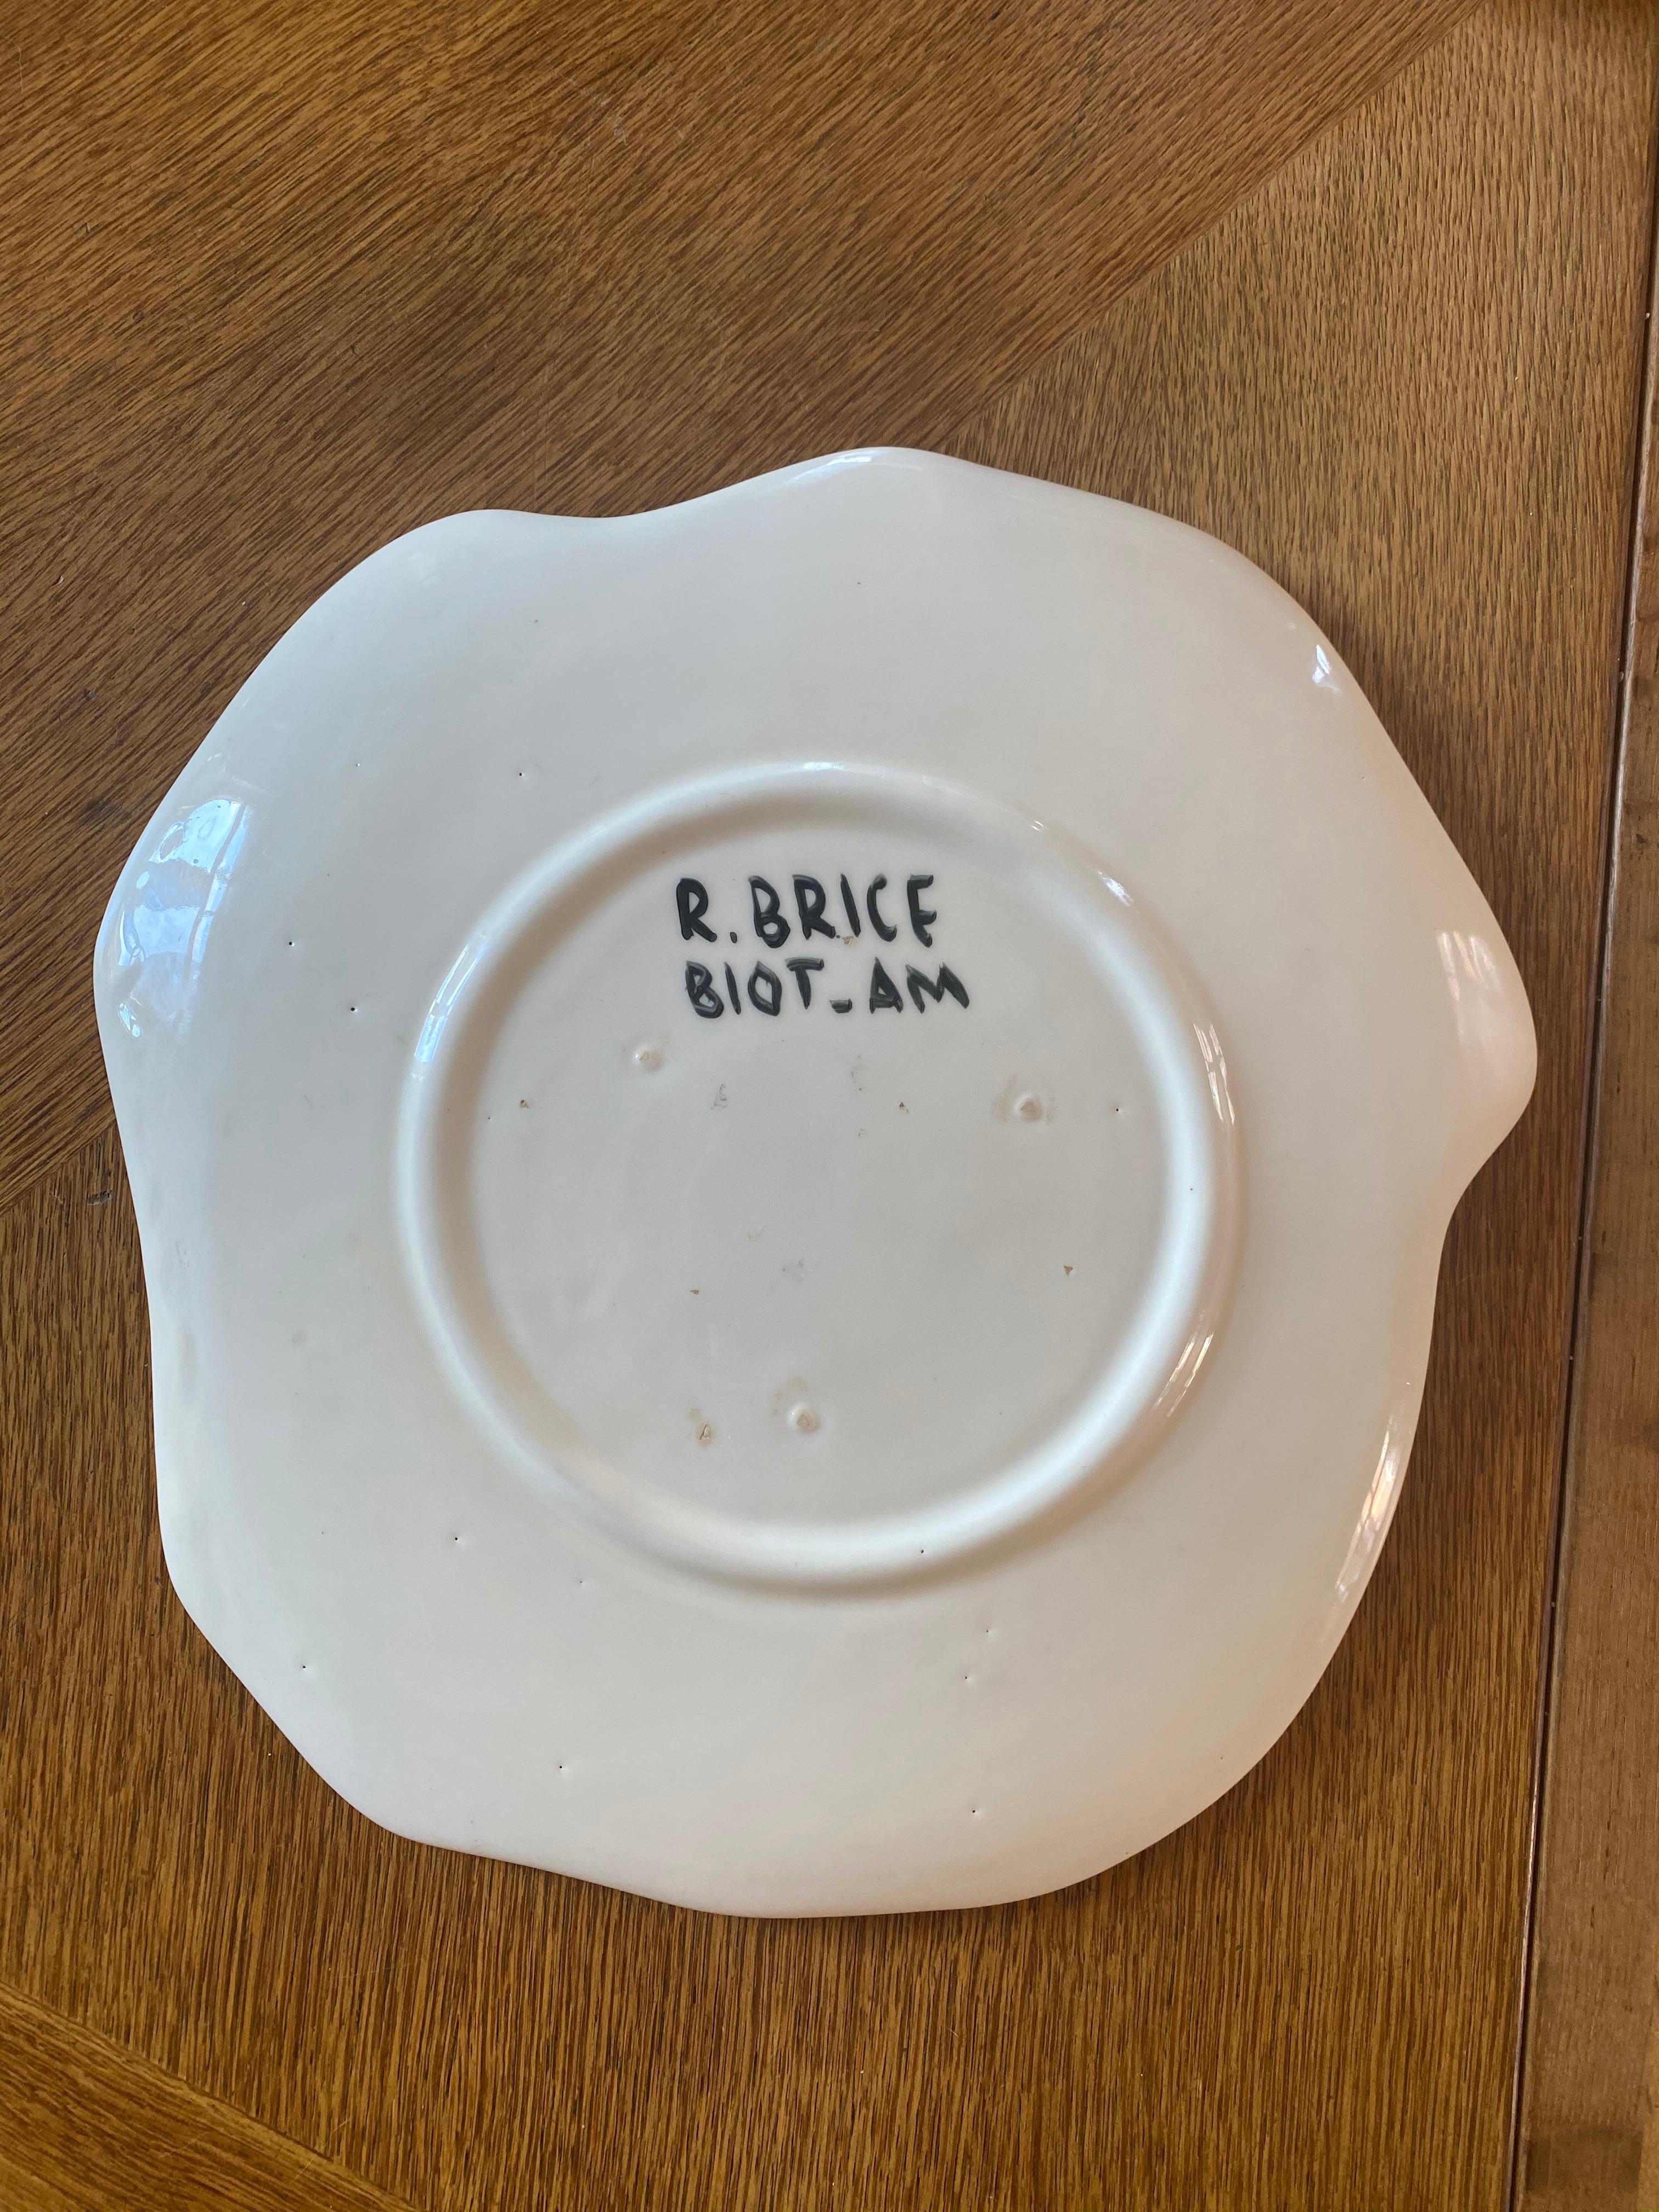 Roland Brice Large Ceramic Dish, Biot, 1950 For Sale 1